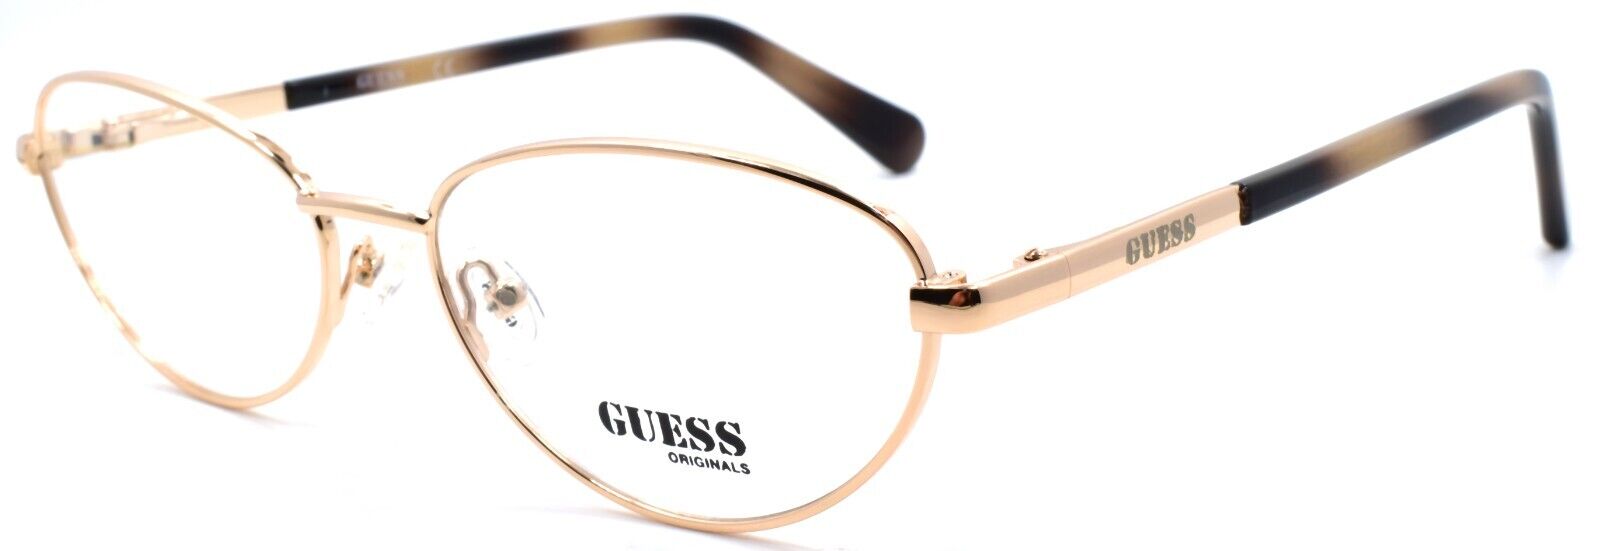 1-GUESS GU8238 032 Eyeglasses Frames 55-16-140 Pale Gold-889214282644-IKSpecs